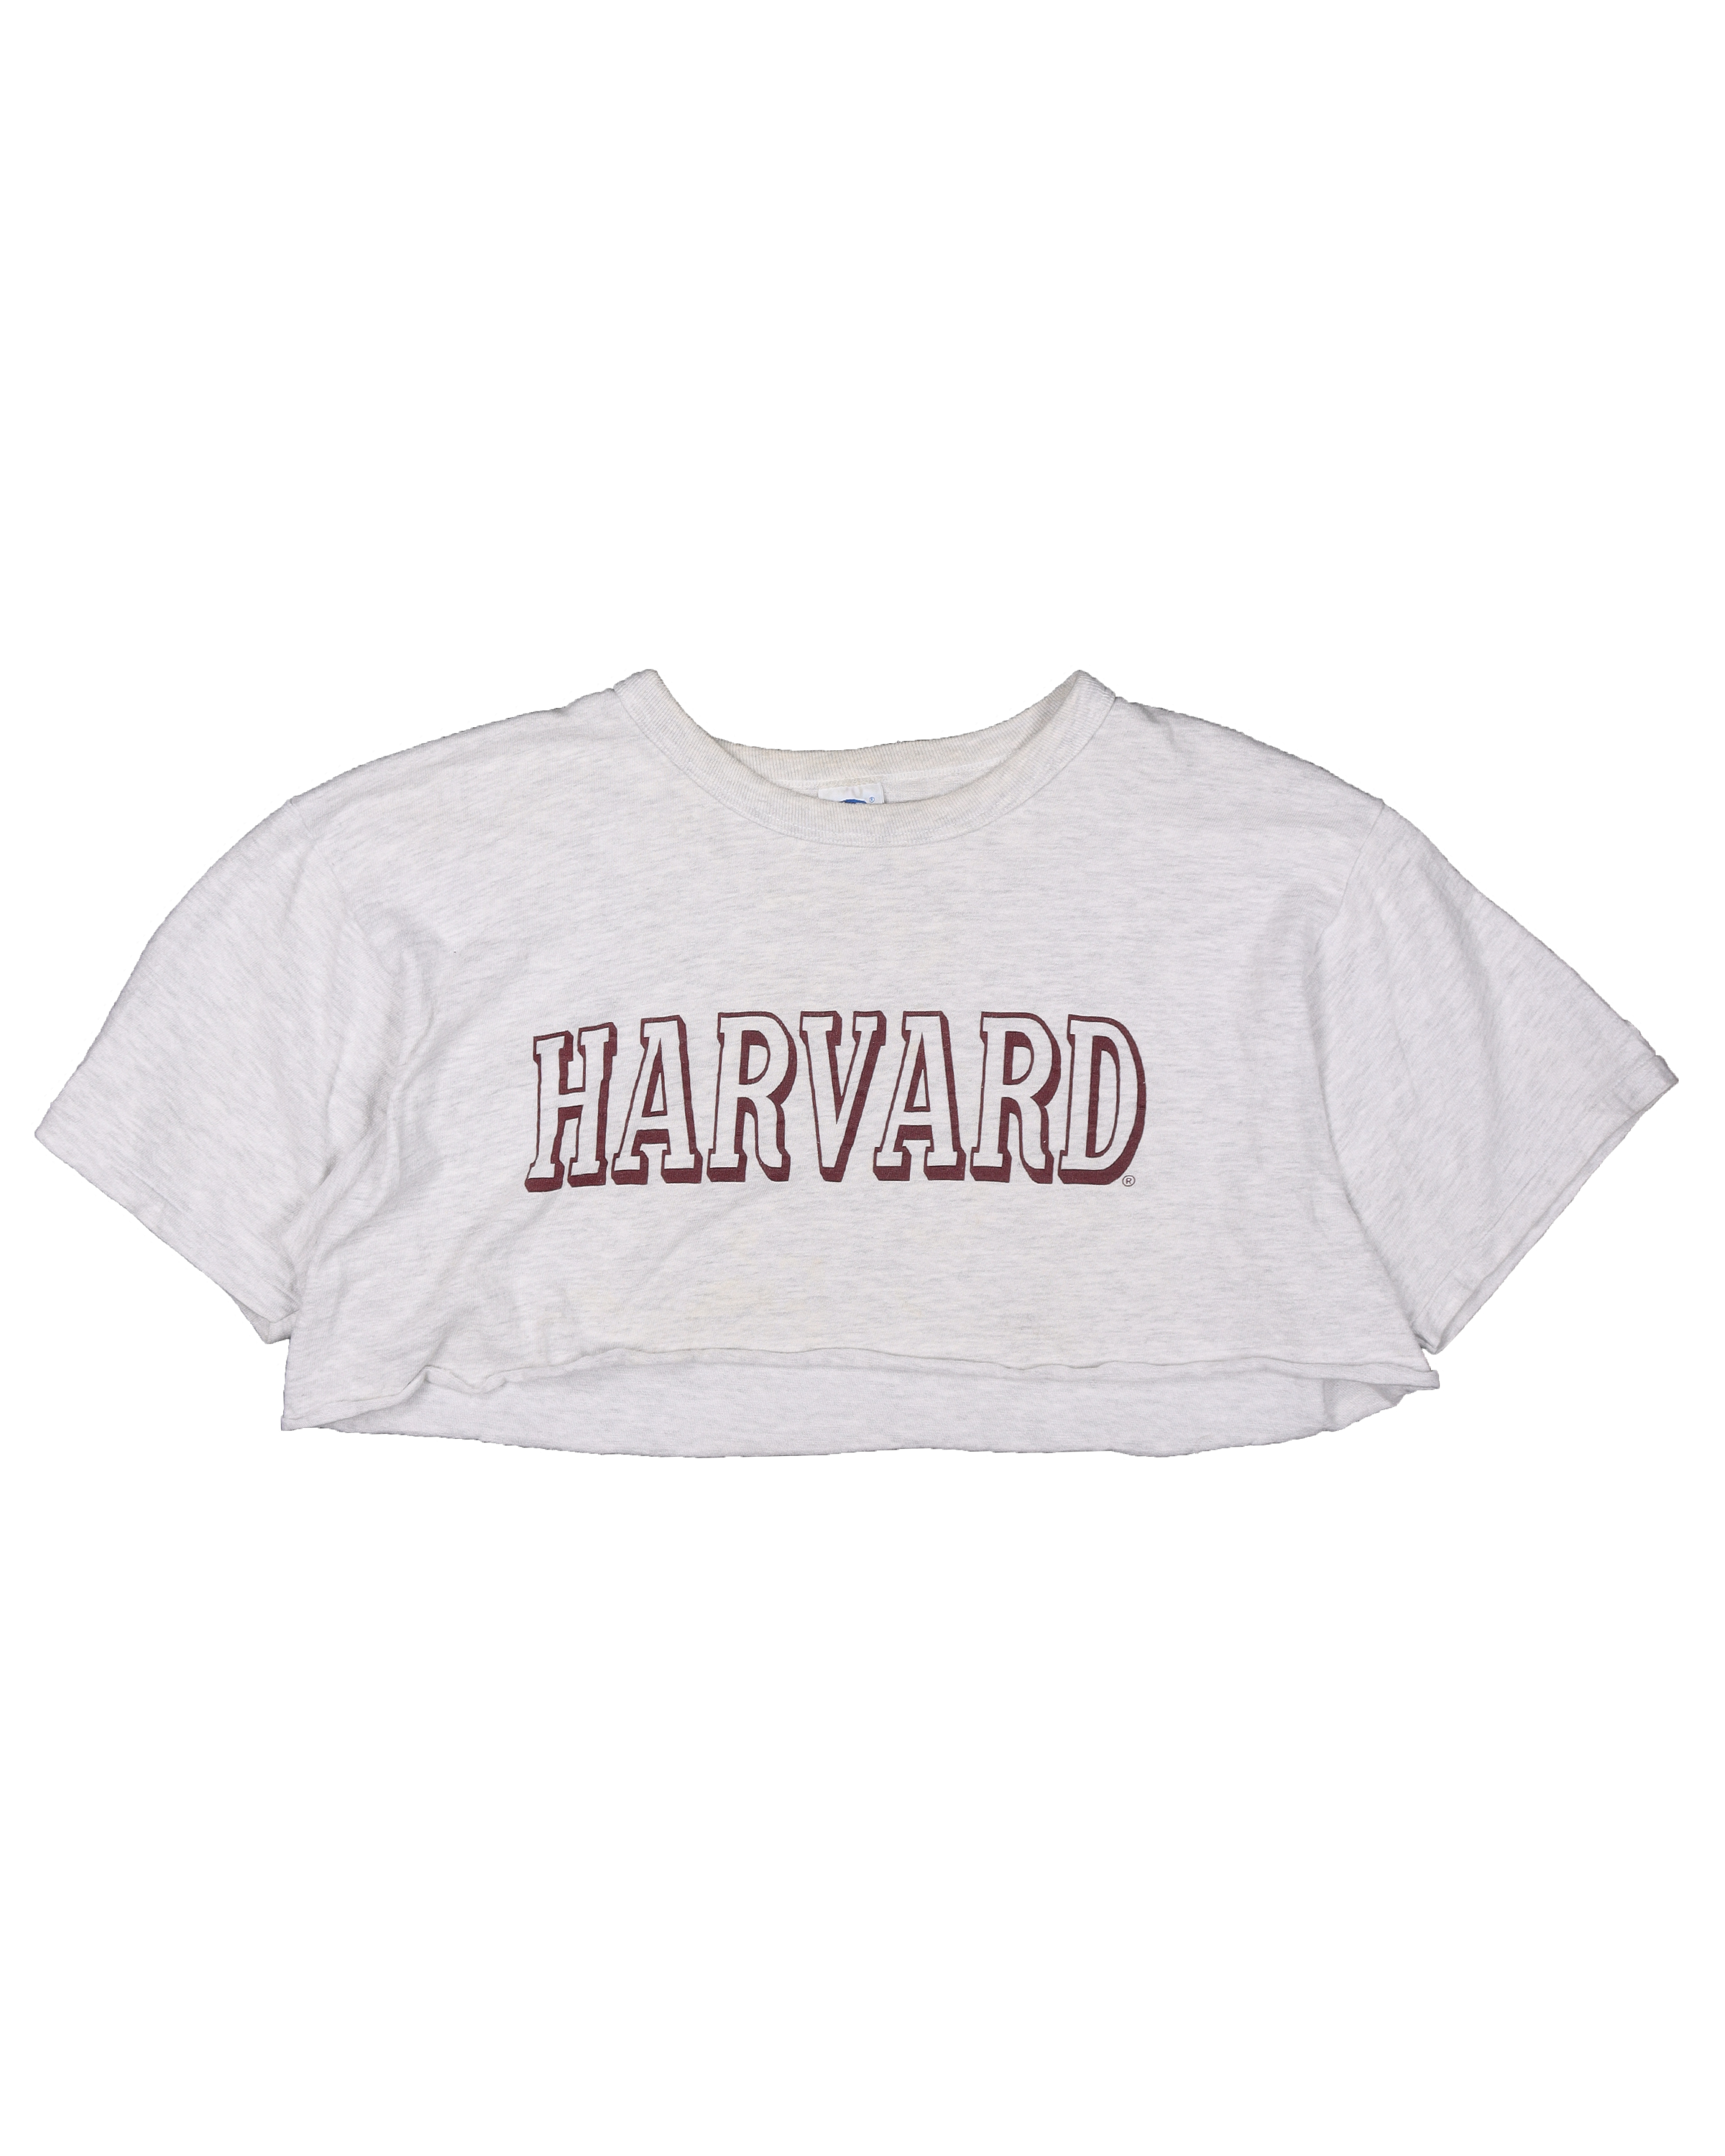 Cropped Harvard T-Shirt